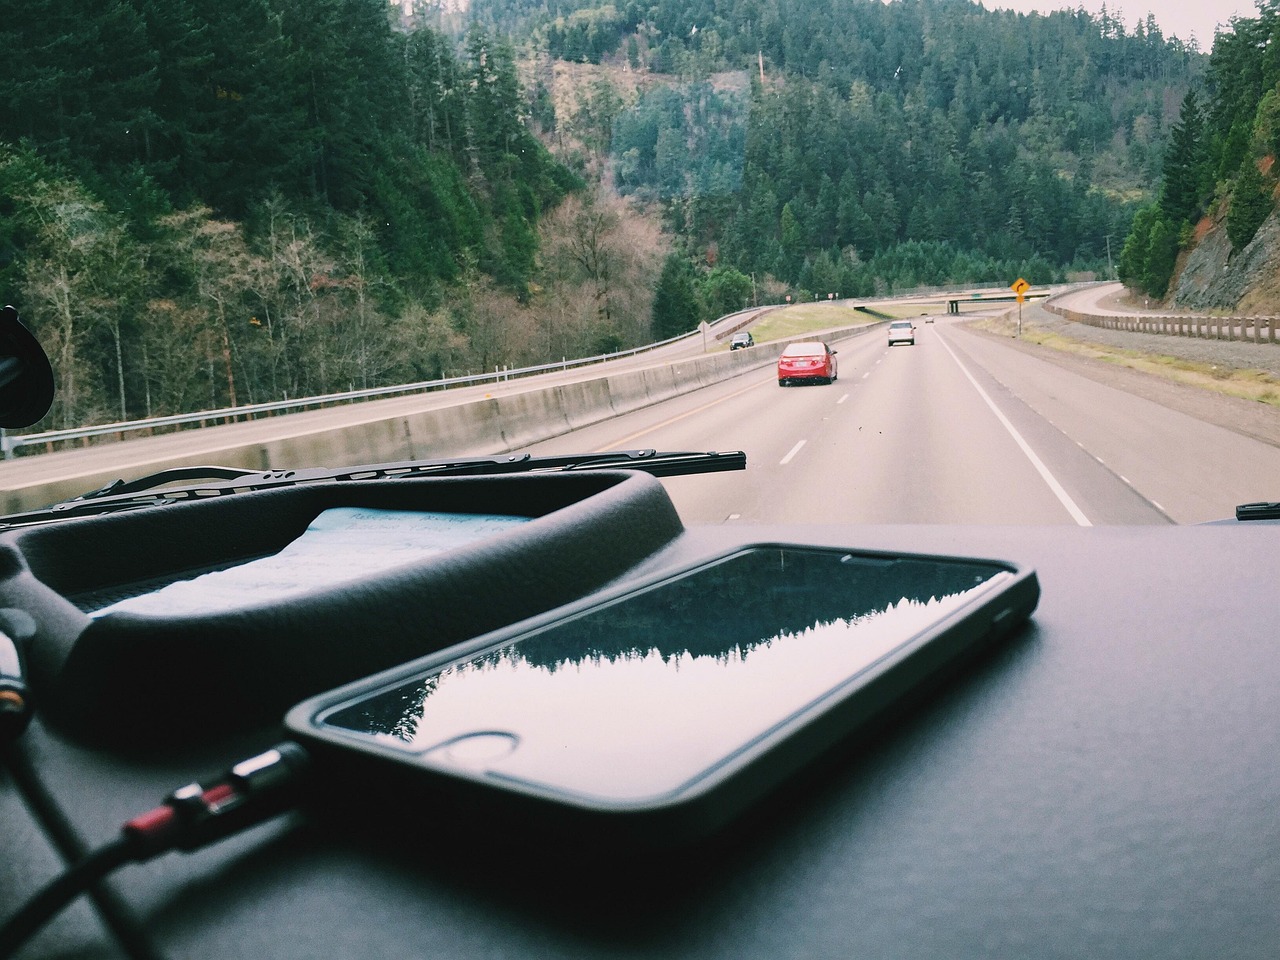 O οδηγός αυτοκινήτου κατά τη διάρκεια της οδήγησης δεν είναι πιο ασφαλής χρησιμοποιώντας το τηλέφωνο με hands-free